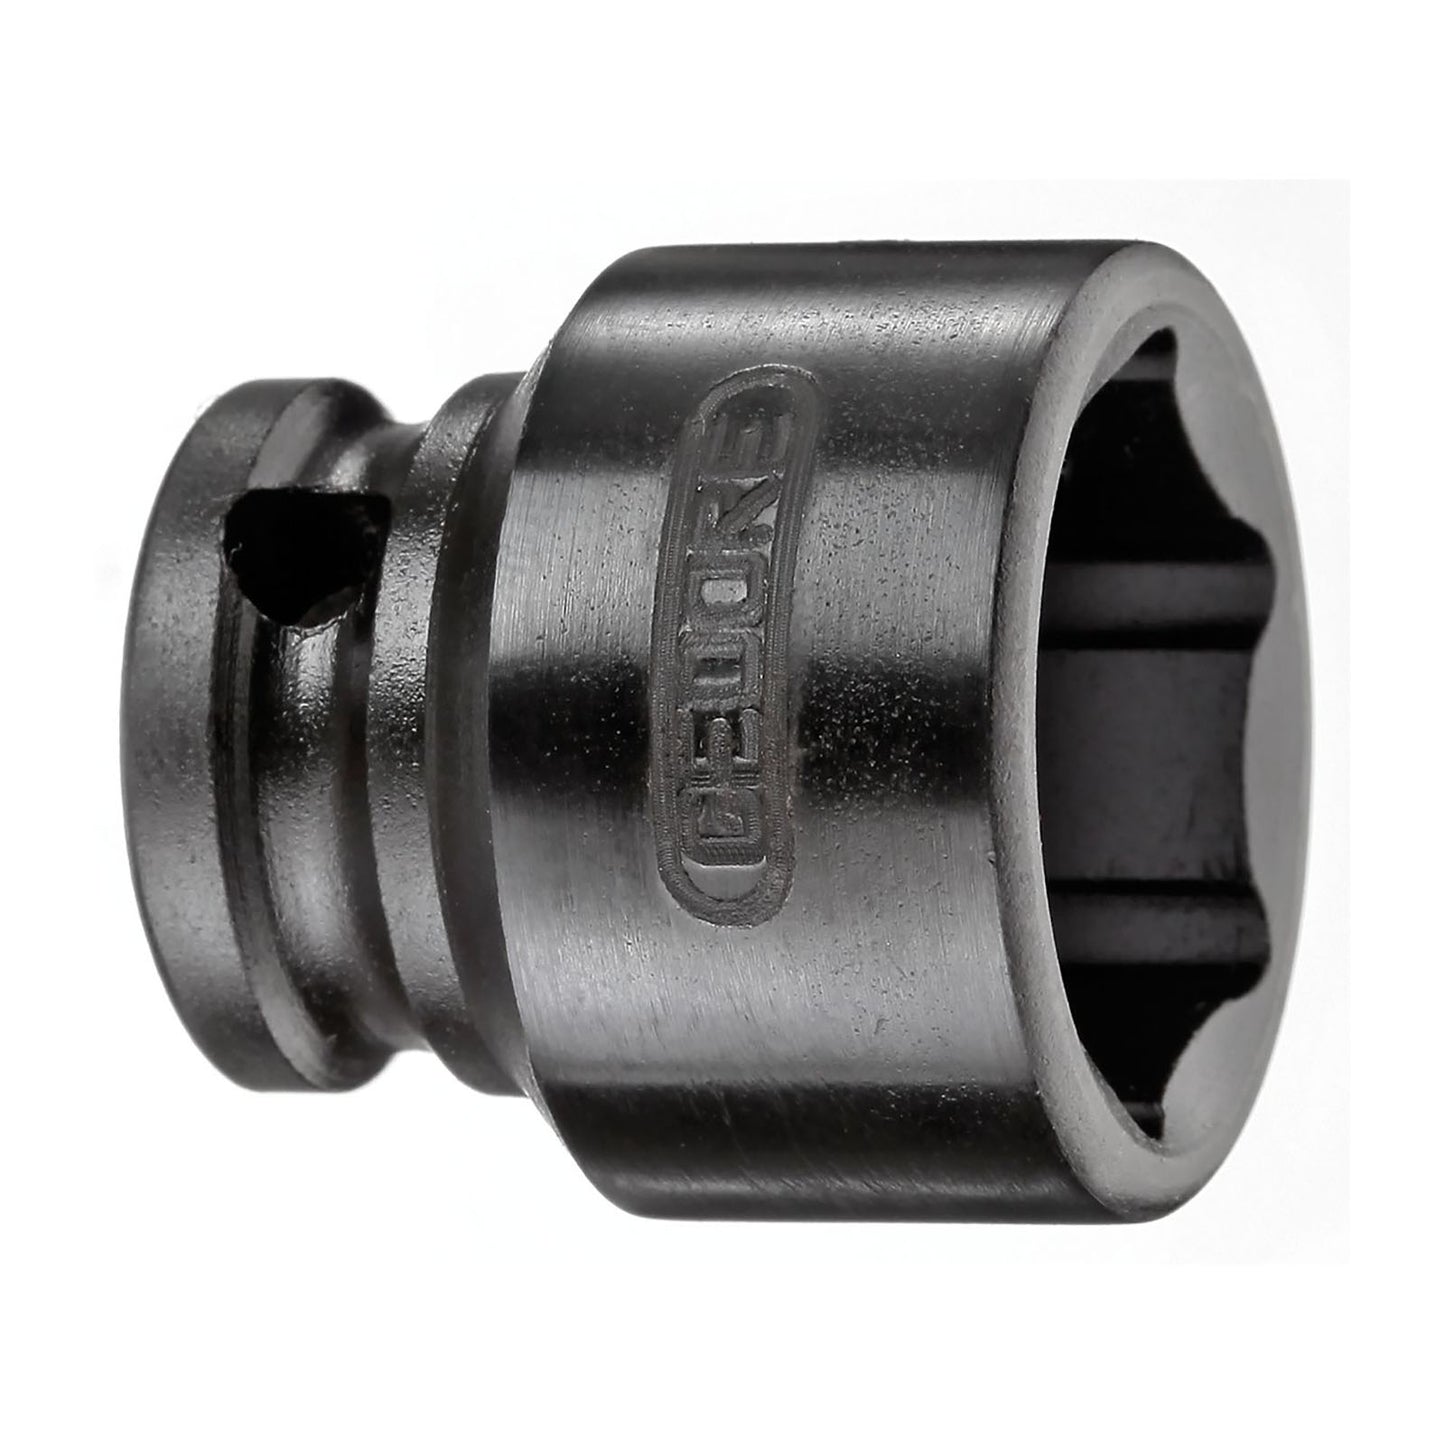 GEDORE K 30 21 - Hex Impact Socket 3/8", 21 mm (6252720)